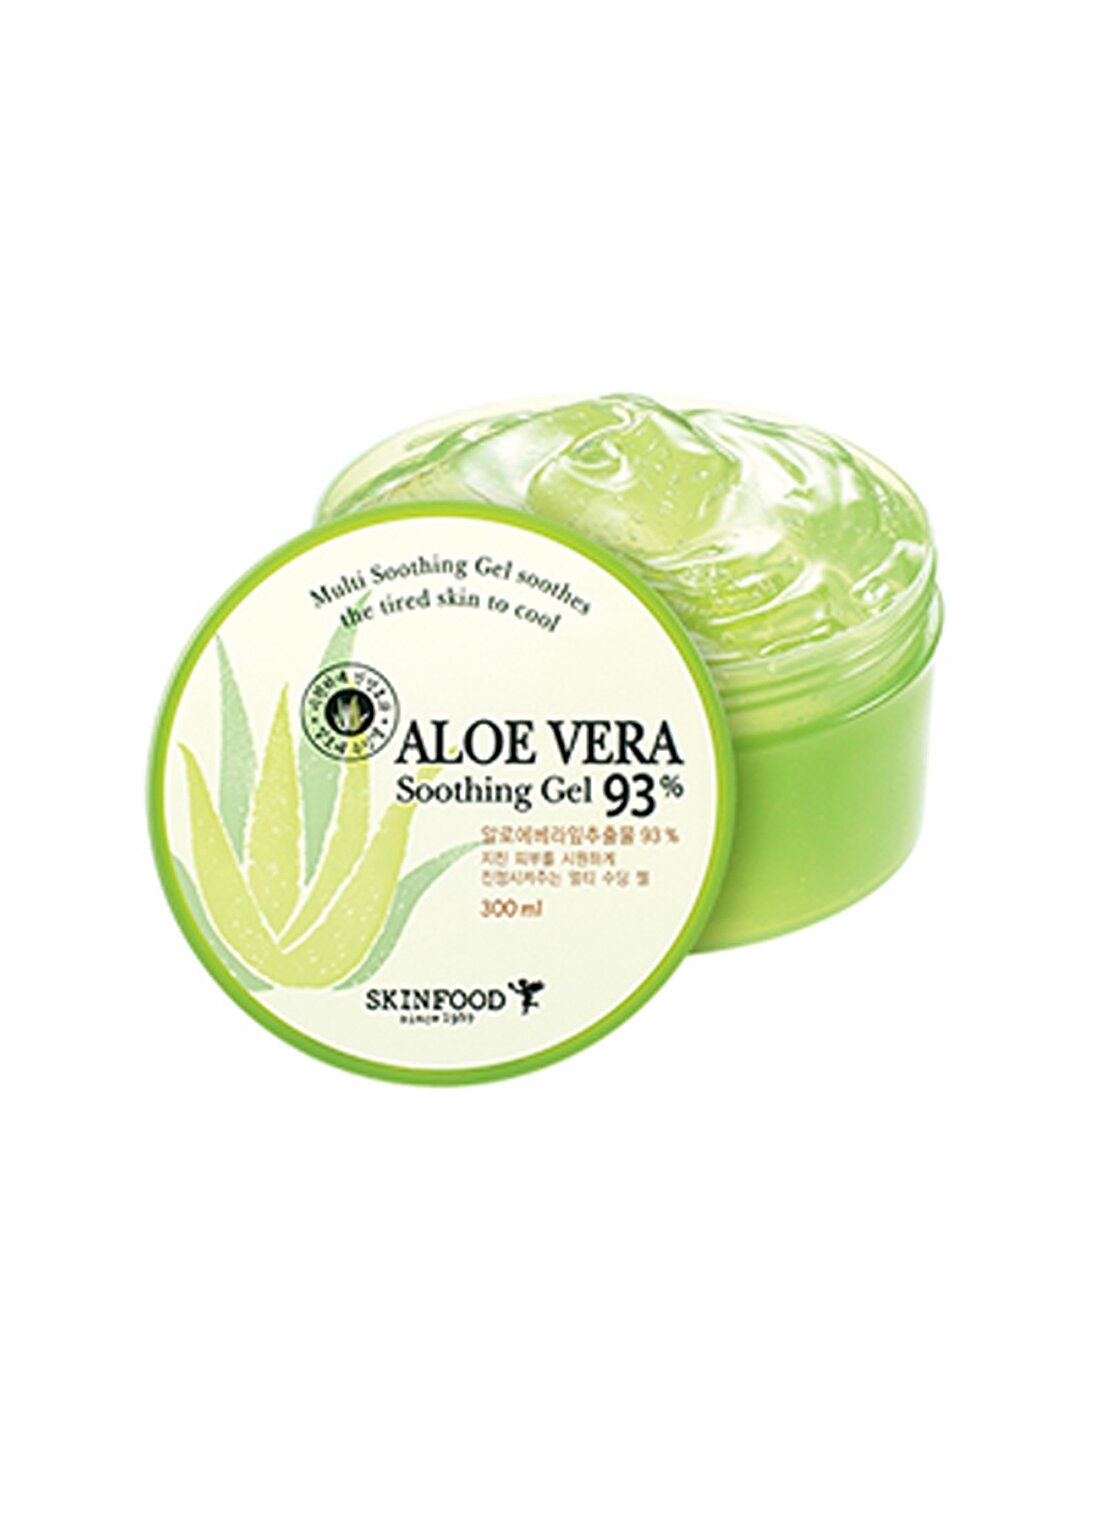 Skinfood Aloe Vera %93 Soothing Gel Vücut Nemlendirici